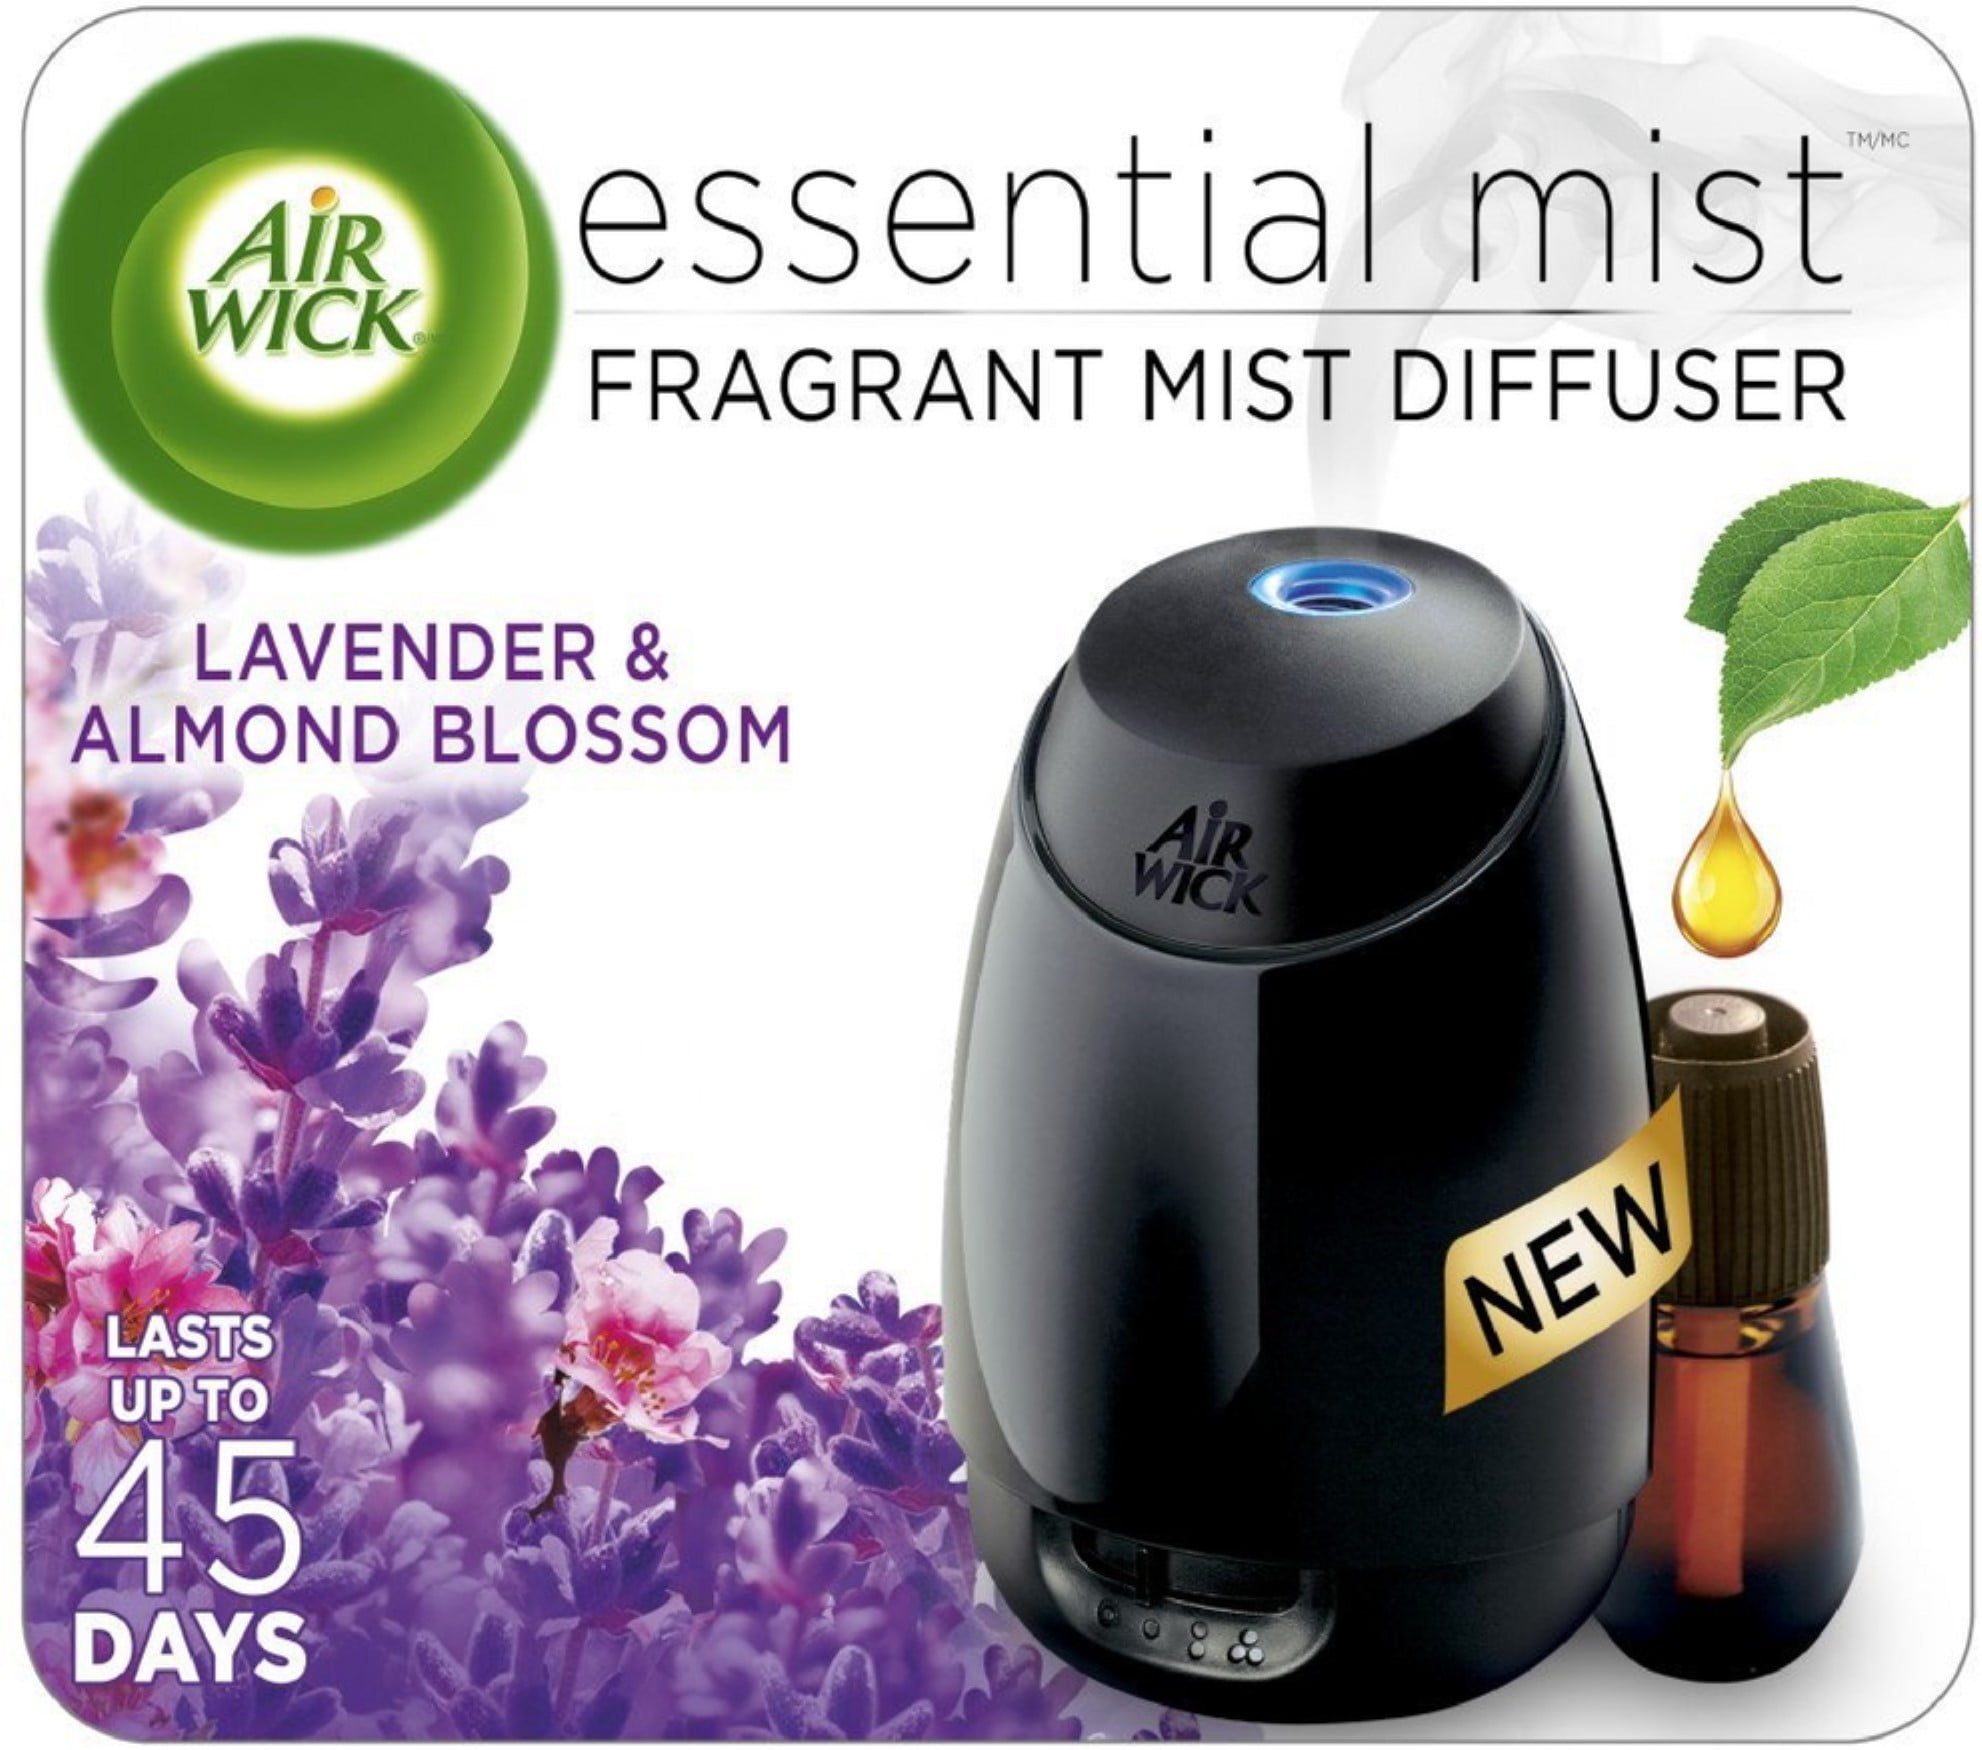 Air Wick Essential Mist Diffuser Mist Kit, Lavender & Almond Blossom 1